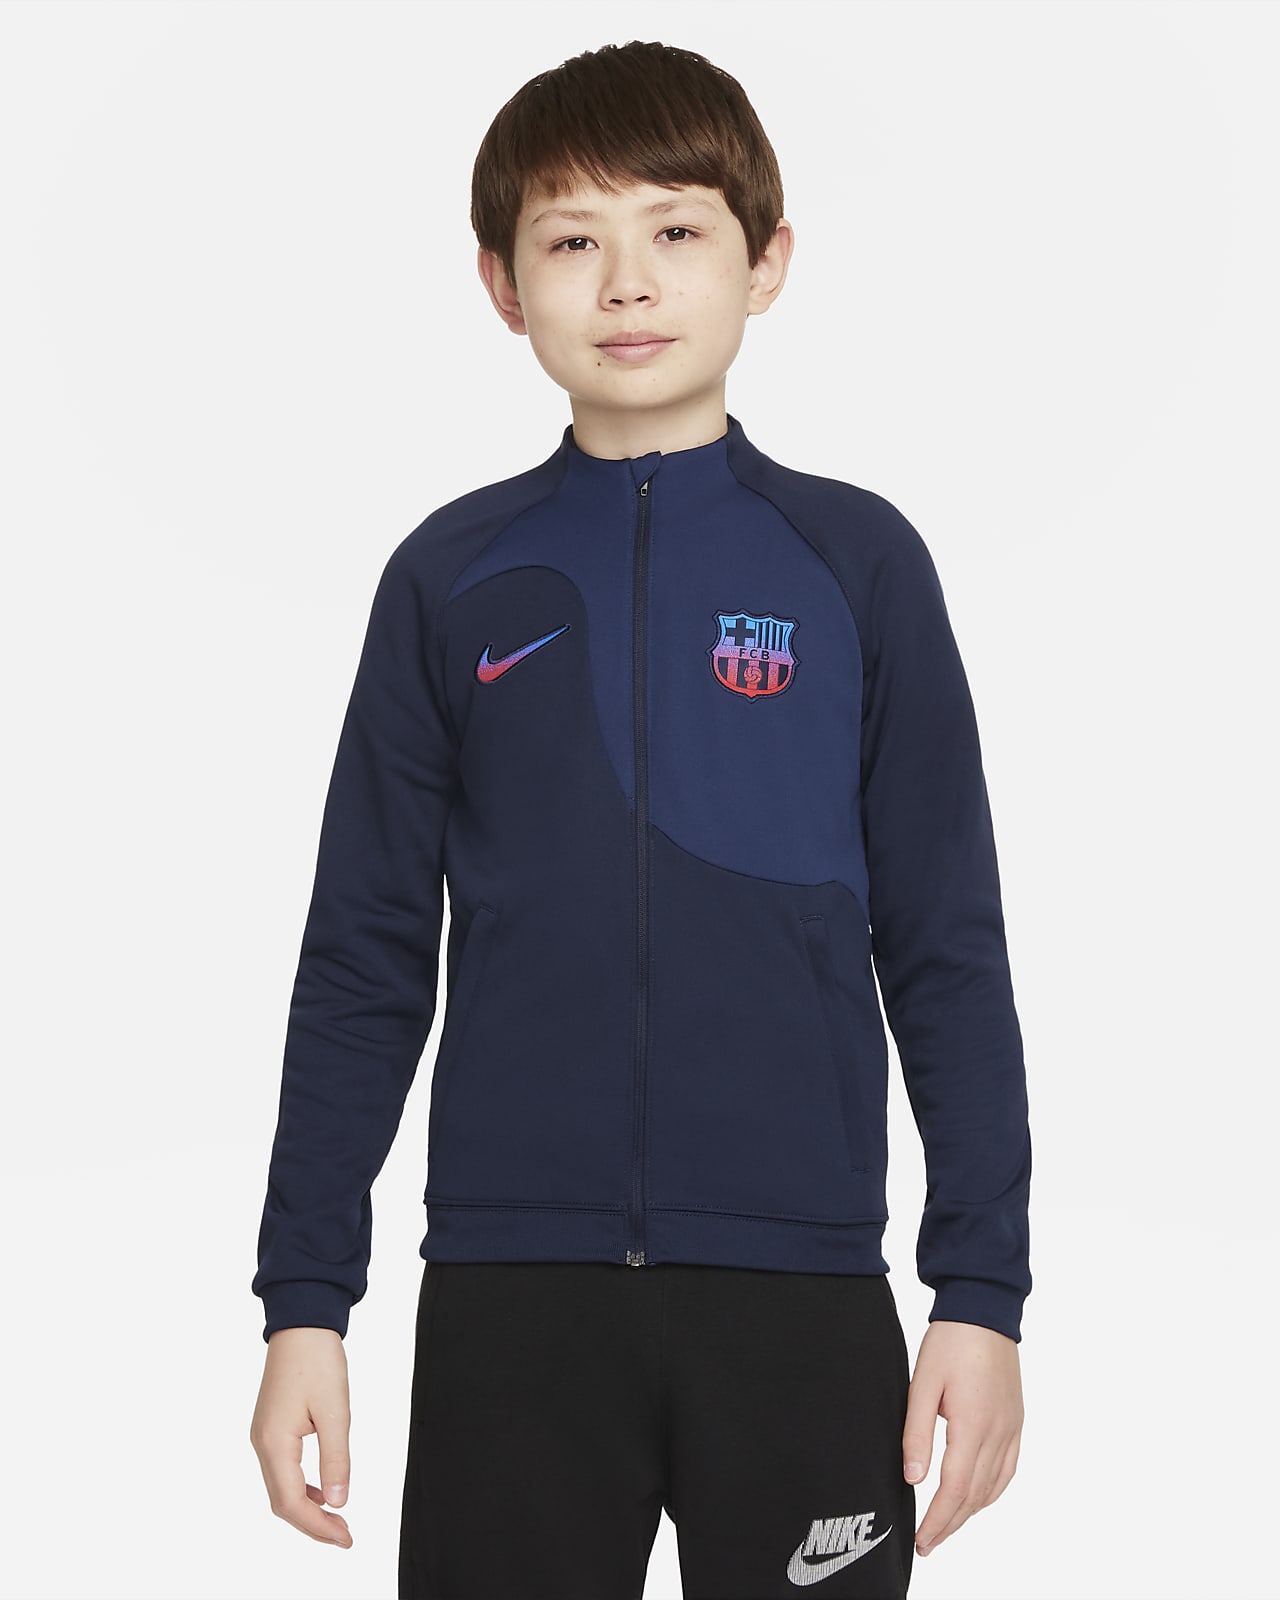 Mucho doble Araña Chamarra de fútbol para niños talla grande Nike FC Barcelona Academy Pro.  Nike.com